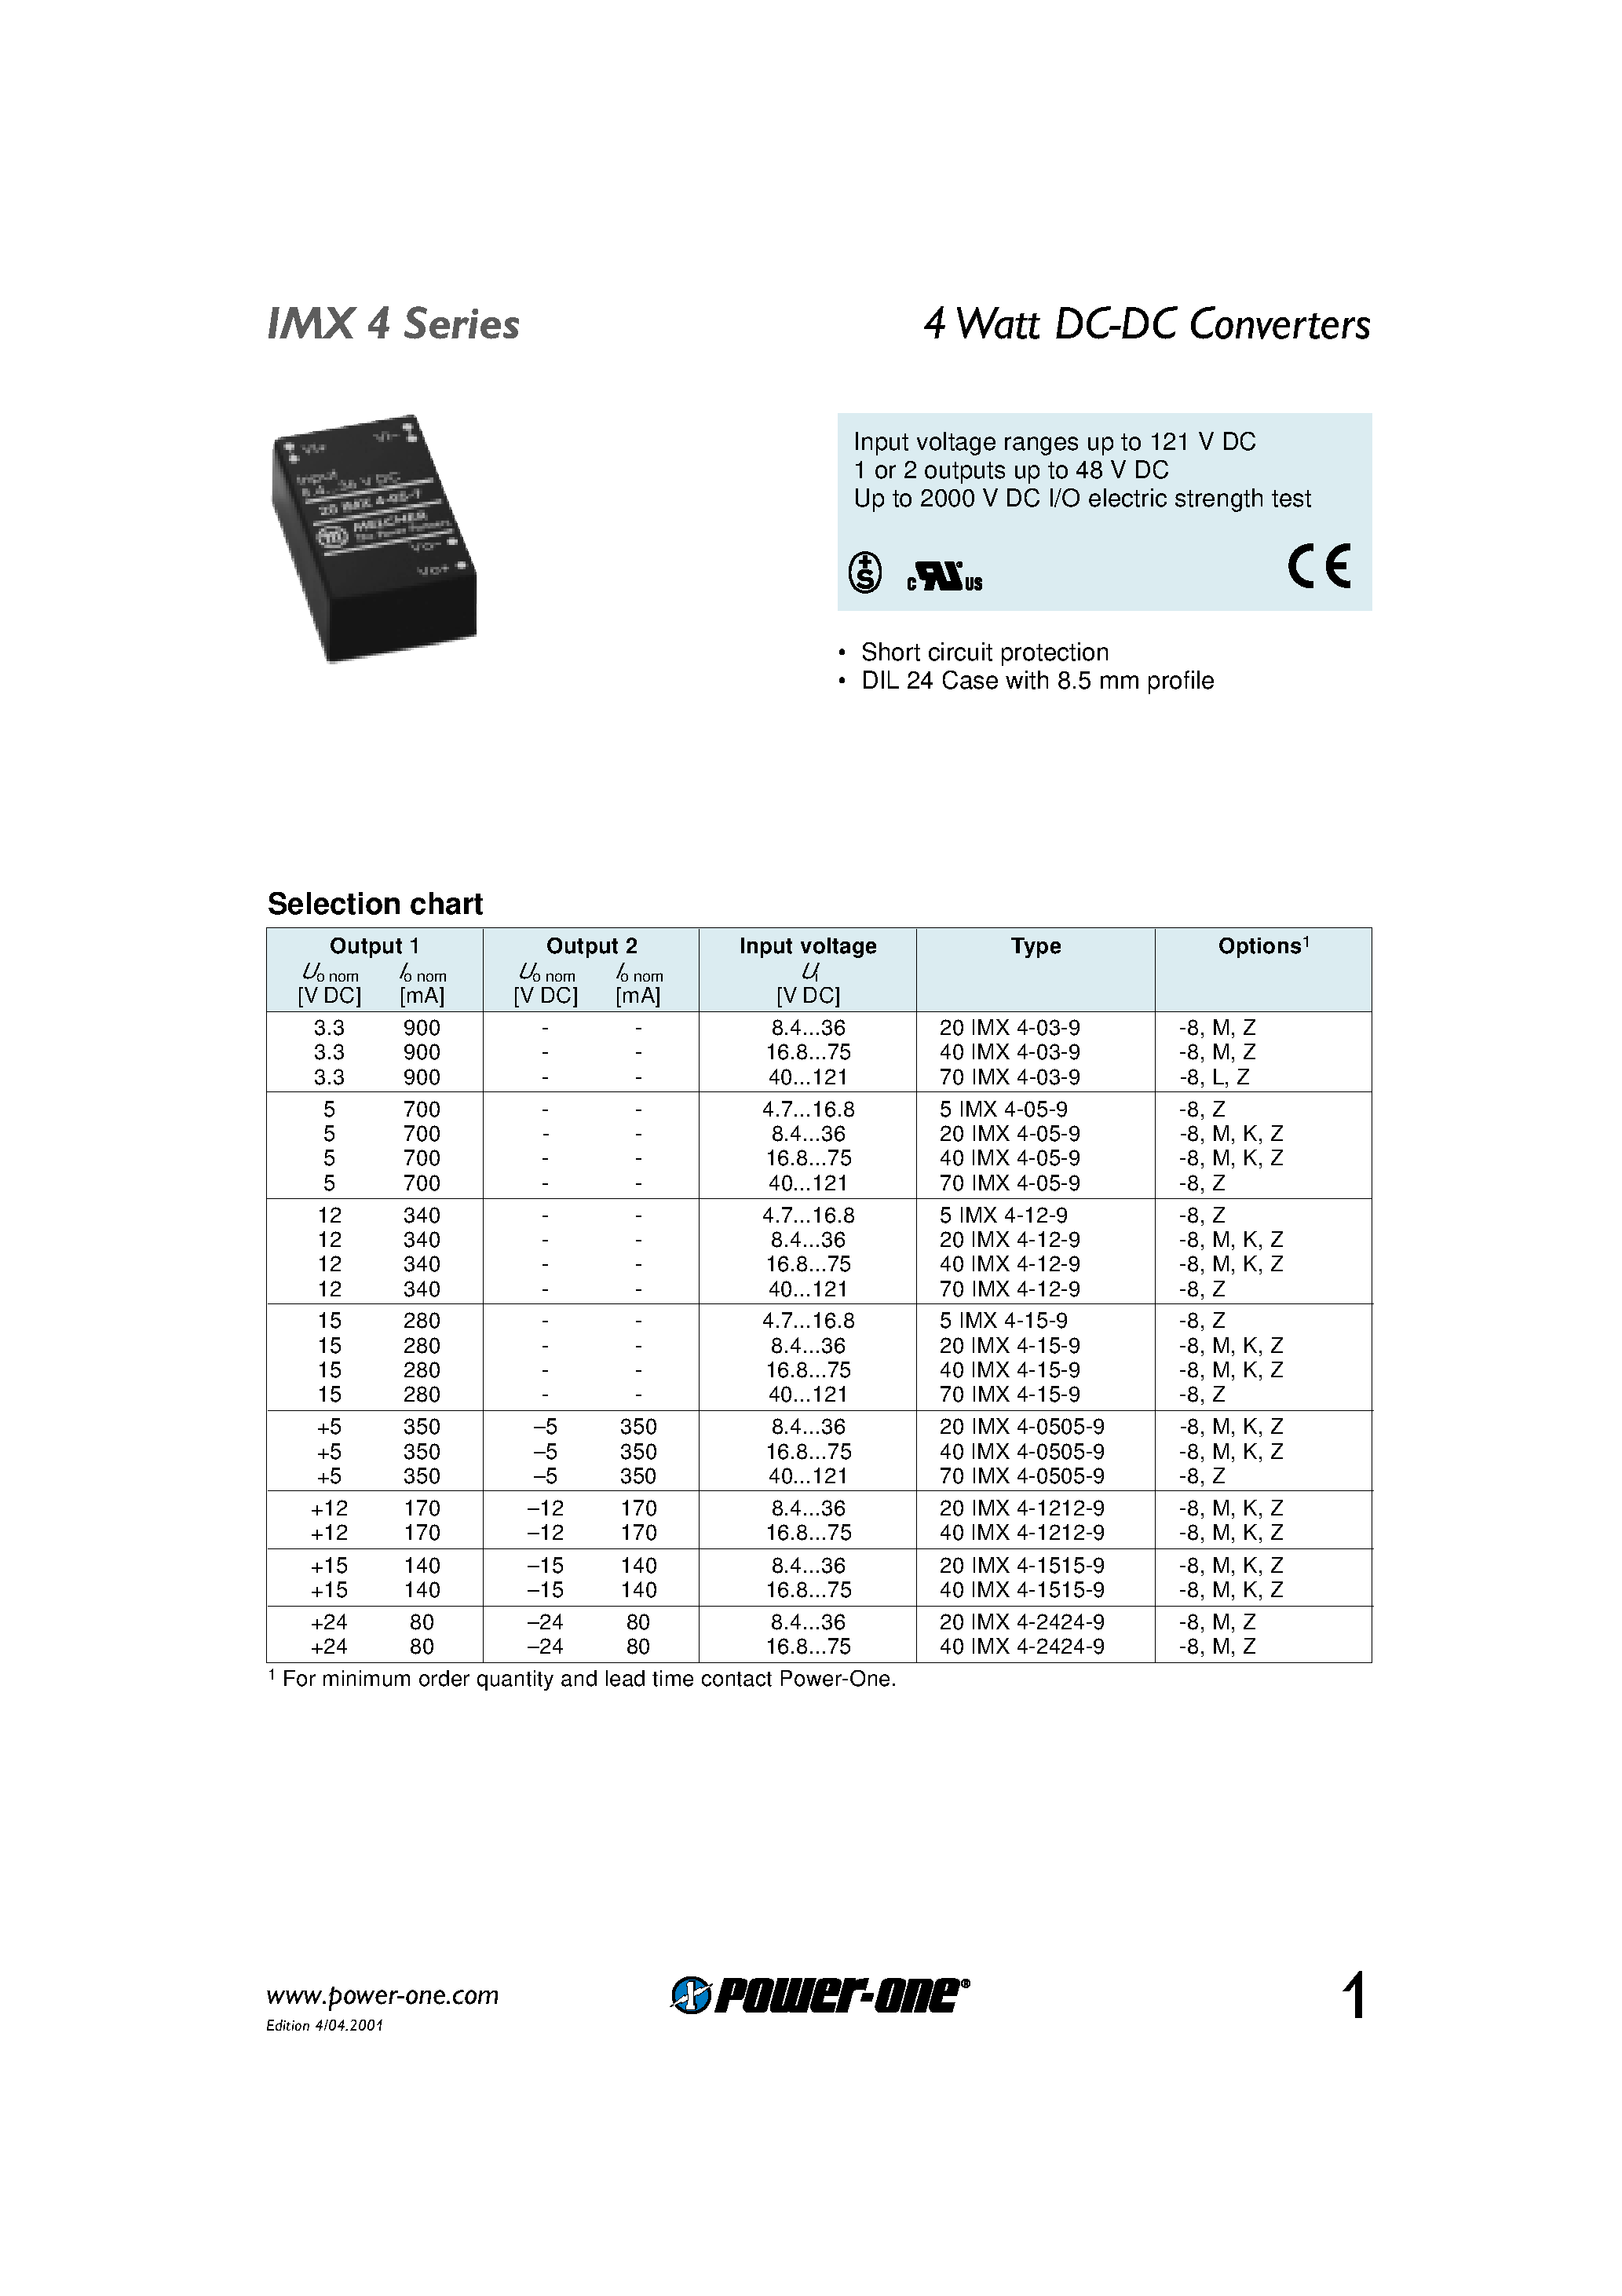 Datasheet 5IMX4-15-9 - 4 Watt DC-DC Converters page 1